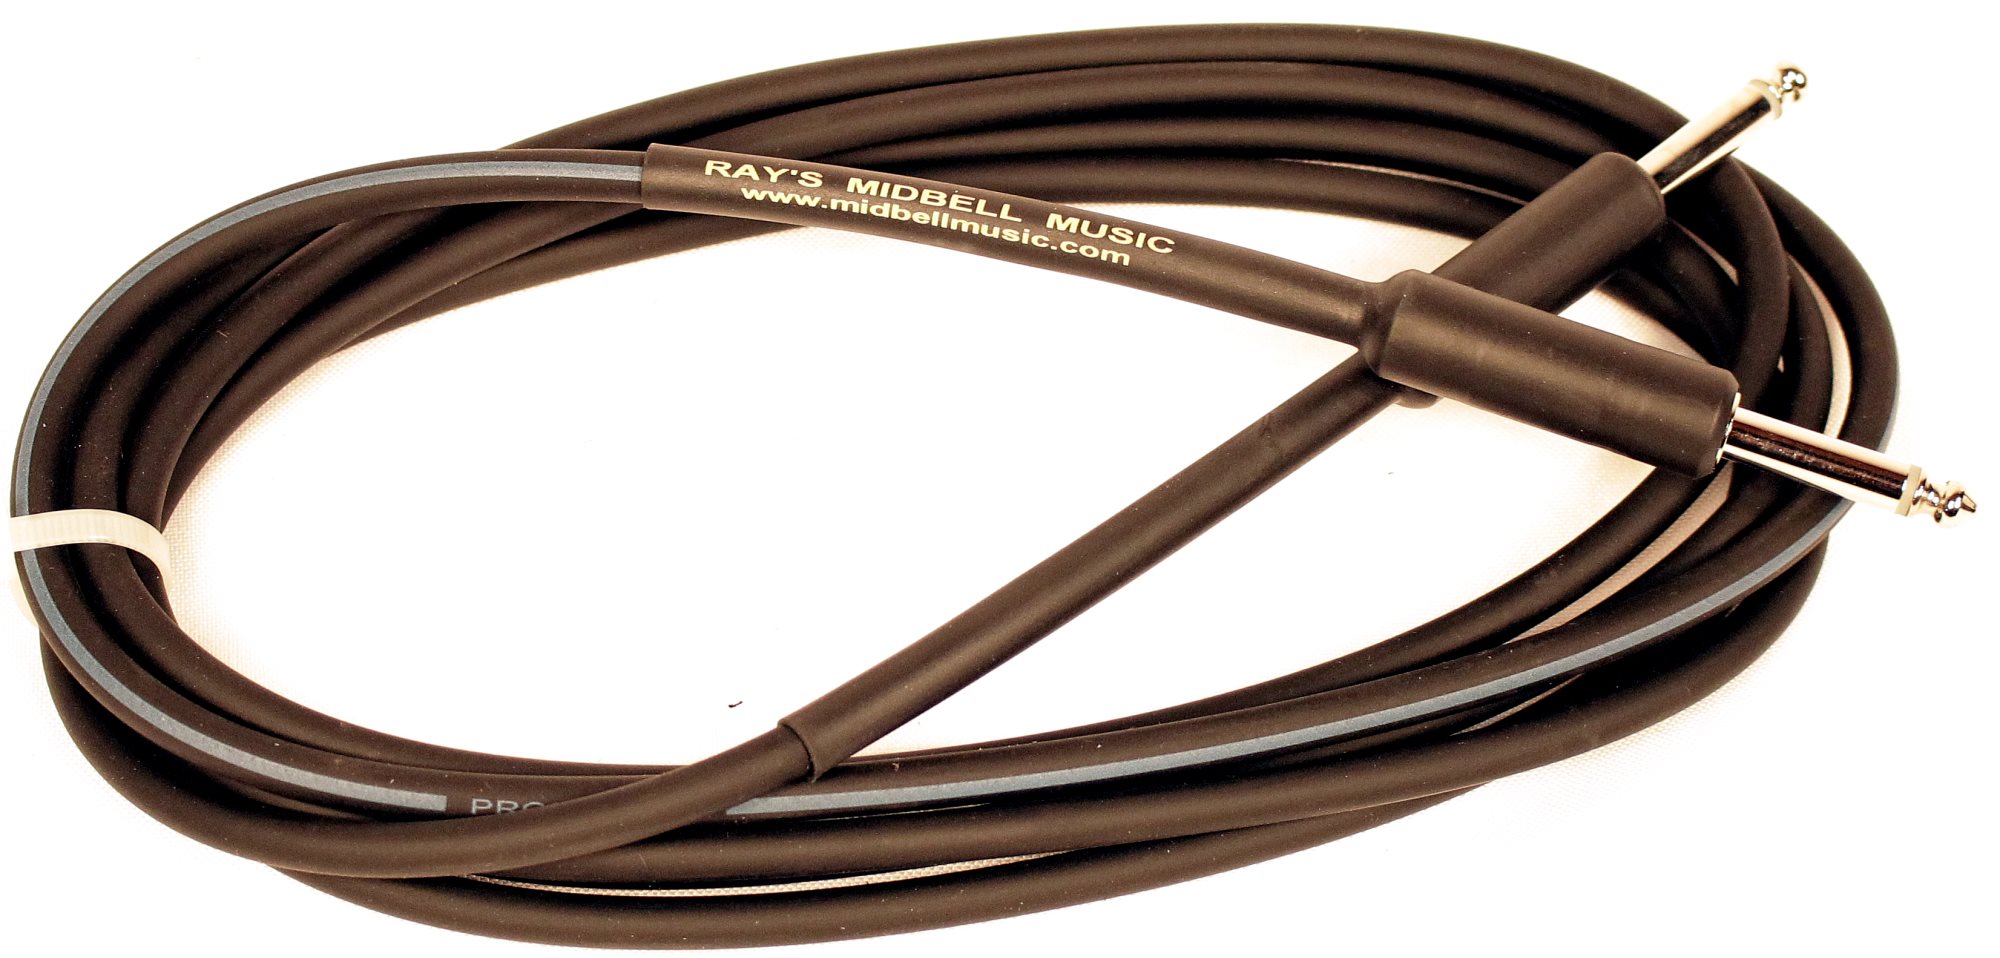 PROformance PRP10 10' Instrument Cable